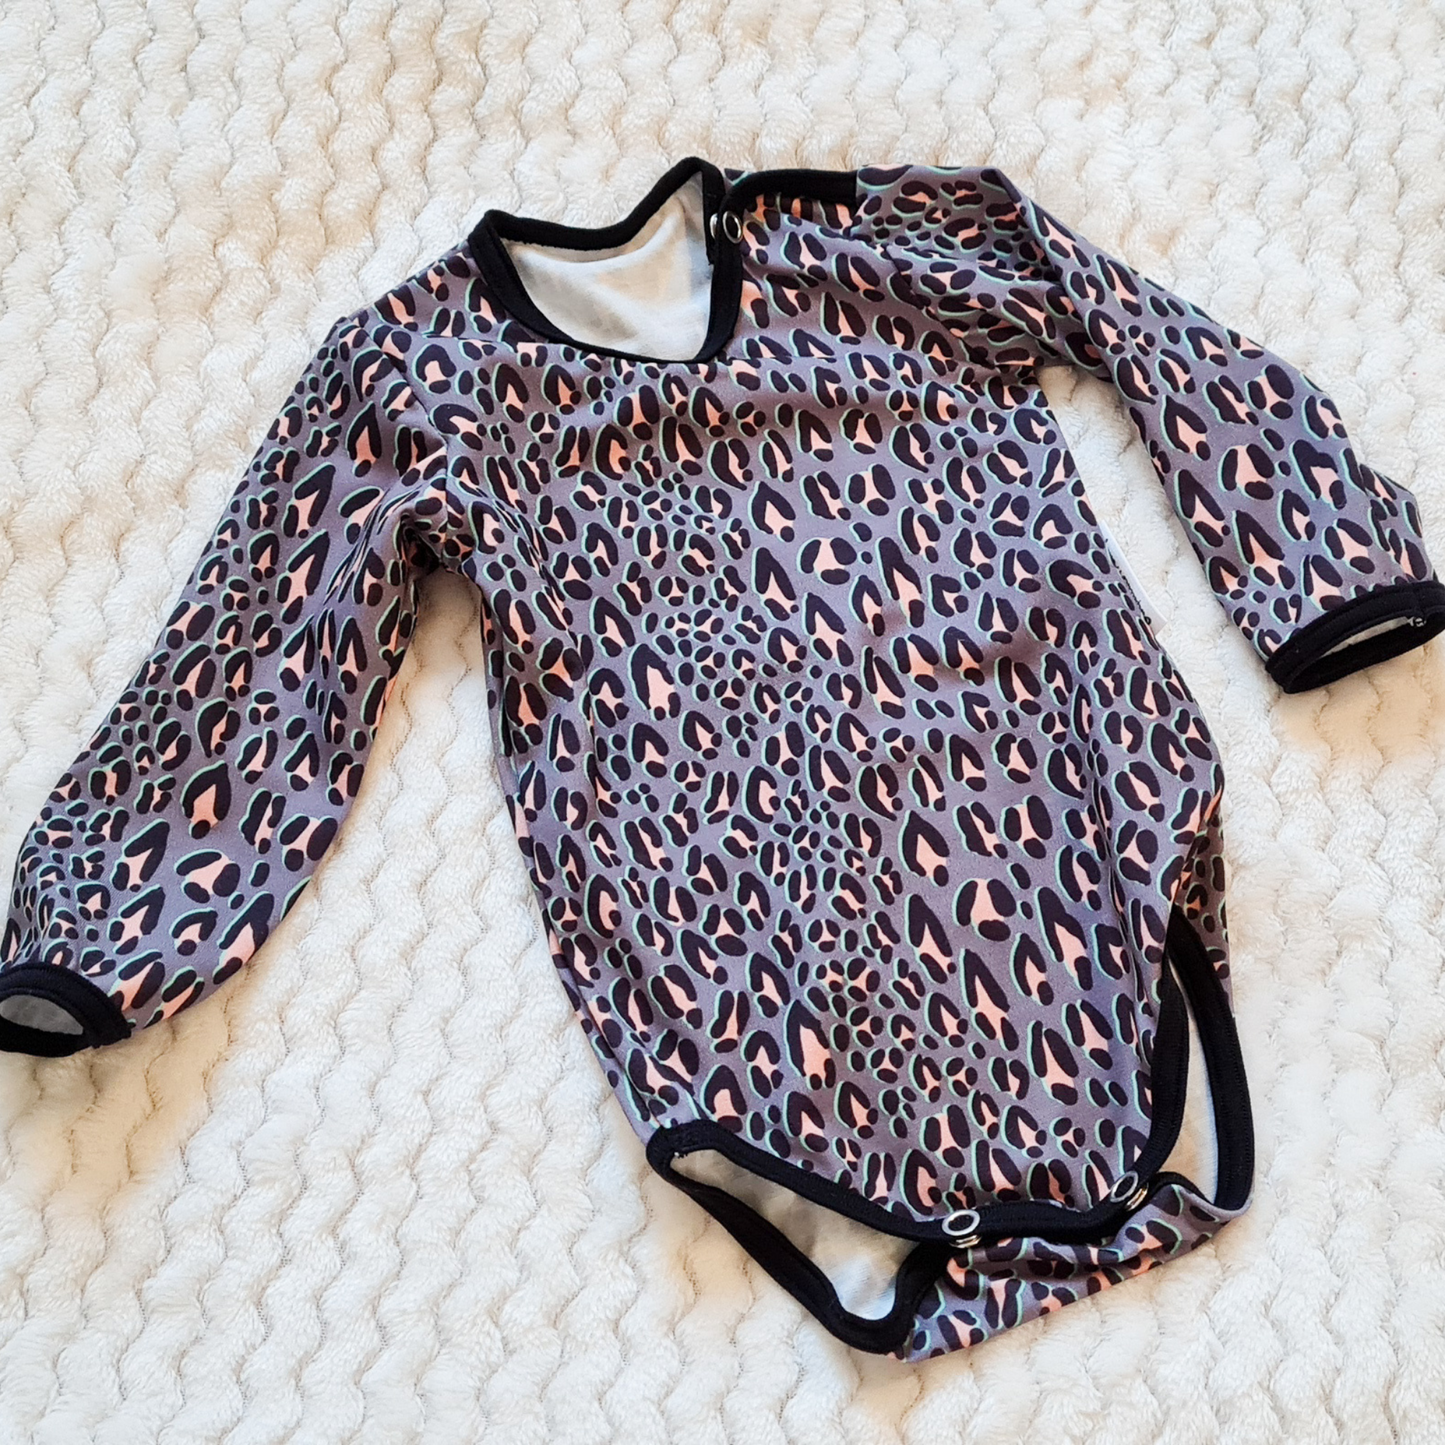 Leopard bodysuit, gray